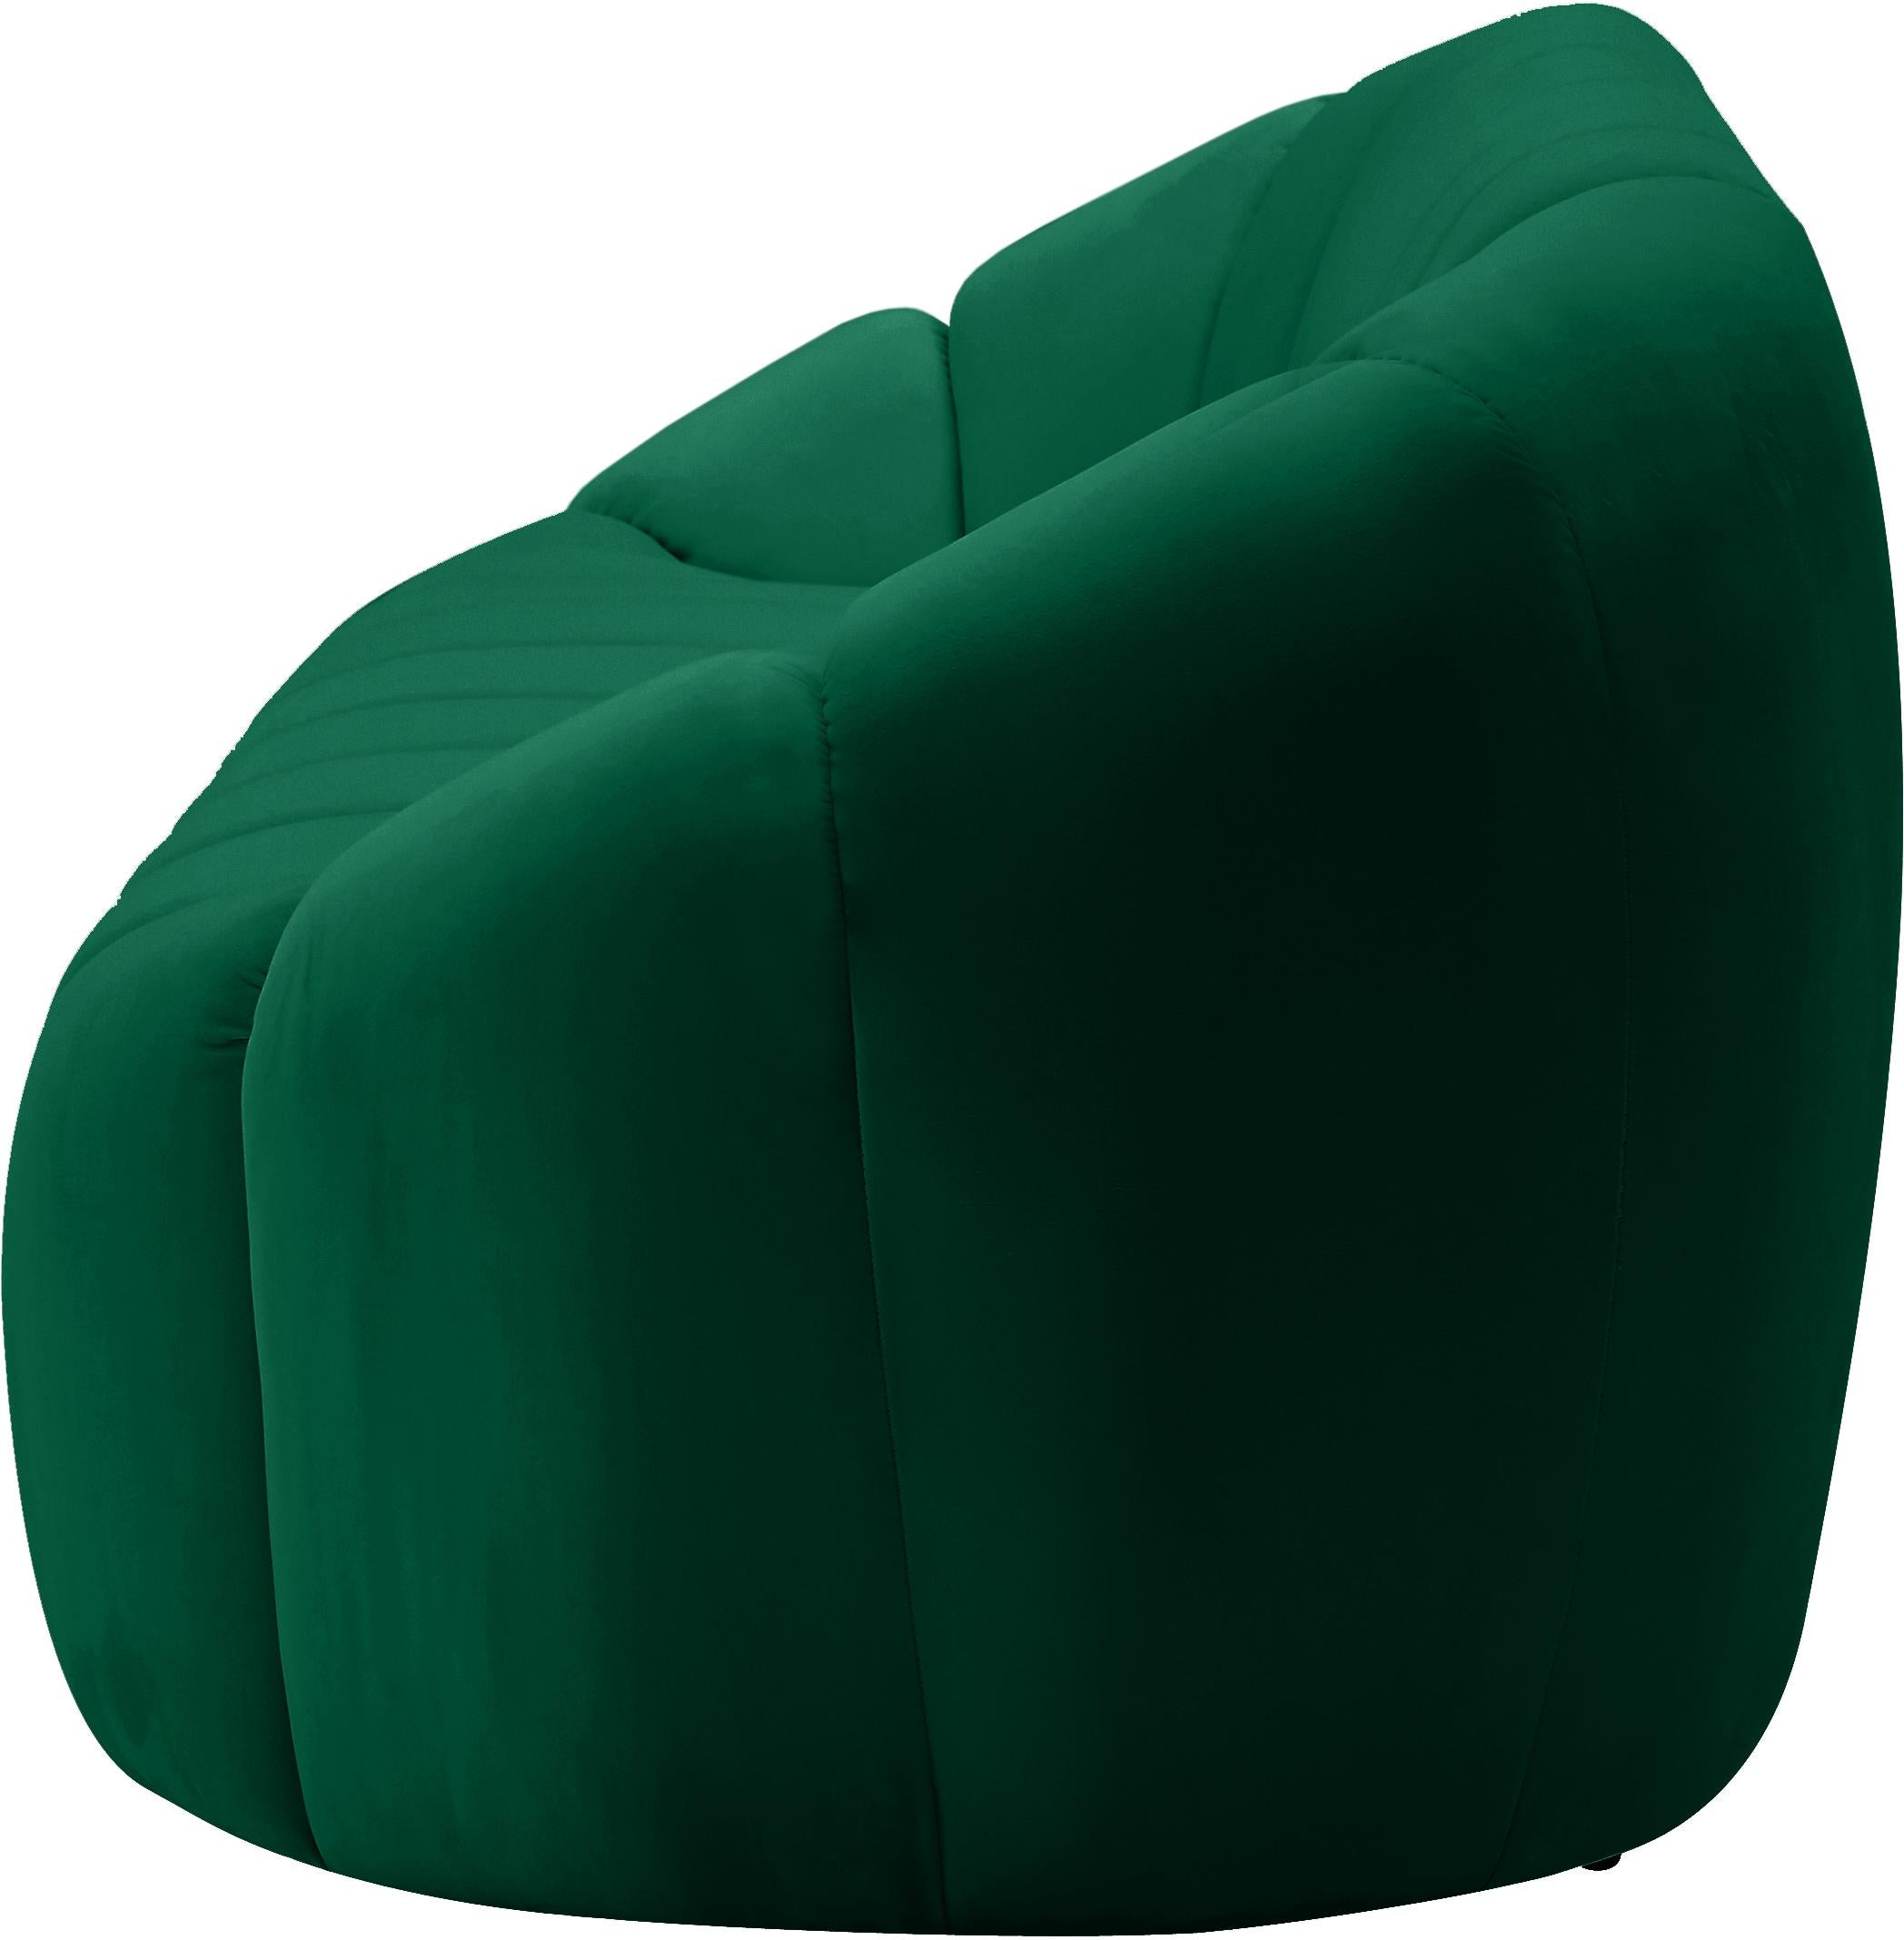 Elijah Green Velvet Loveseat - Luxury Home Furniture (MI)